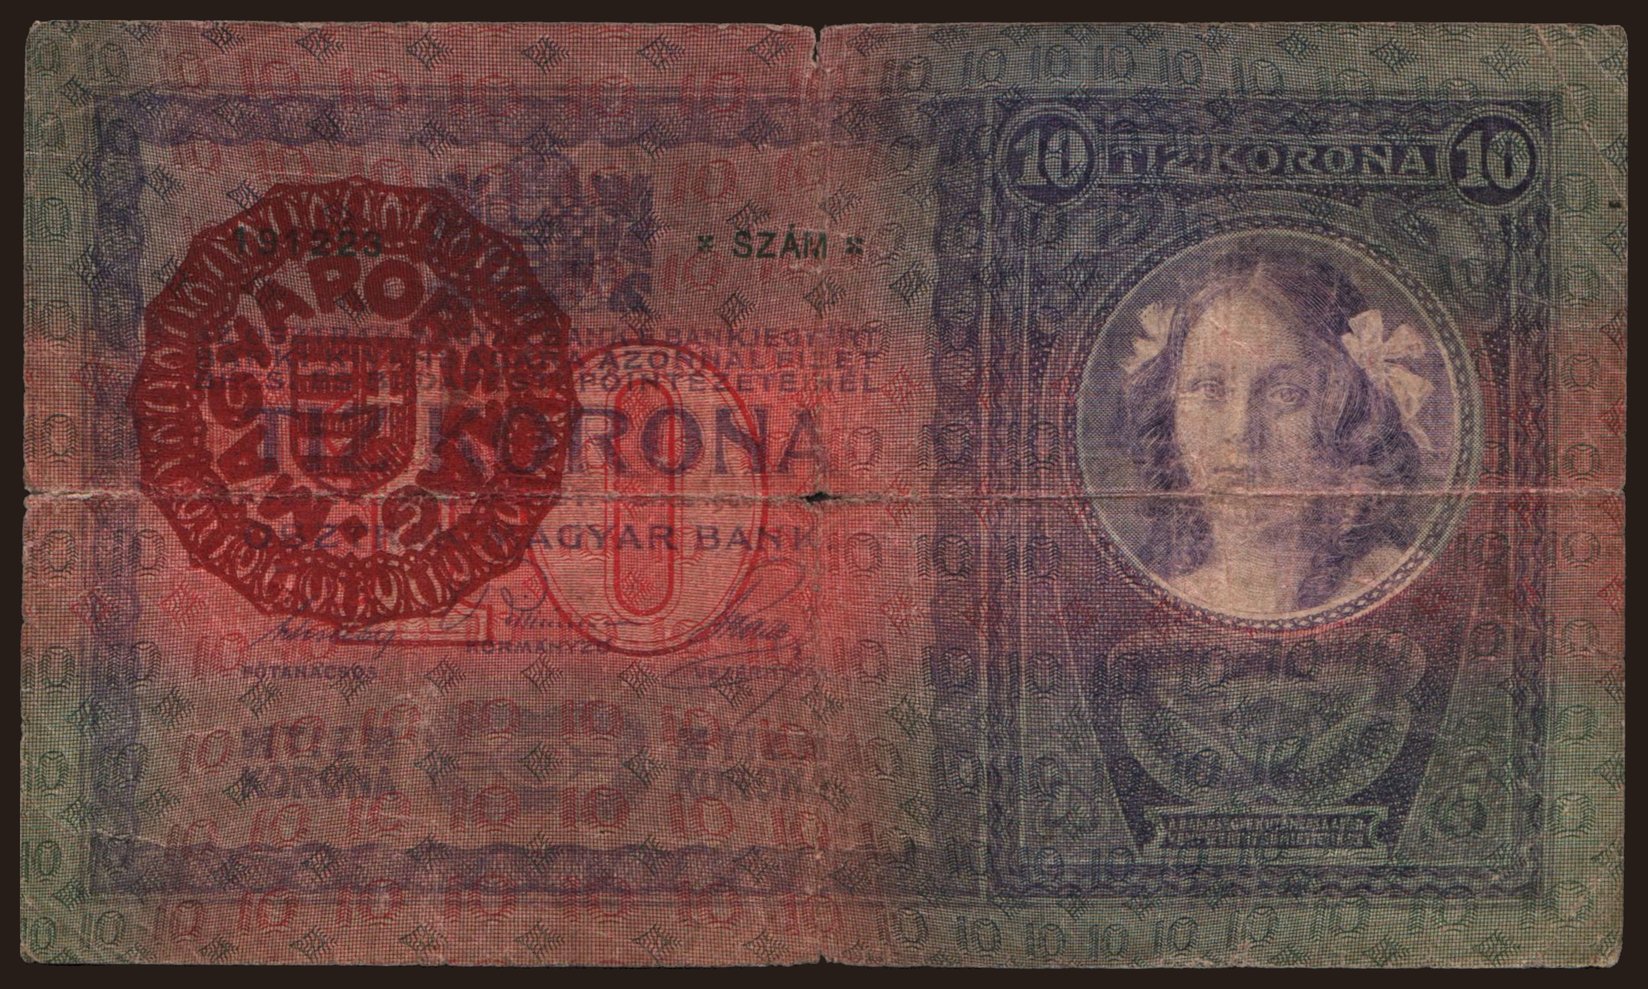 10 korona, 1904(20)